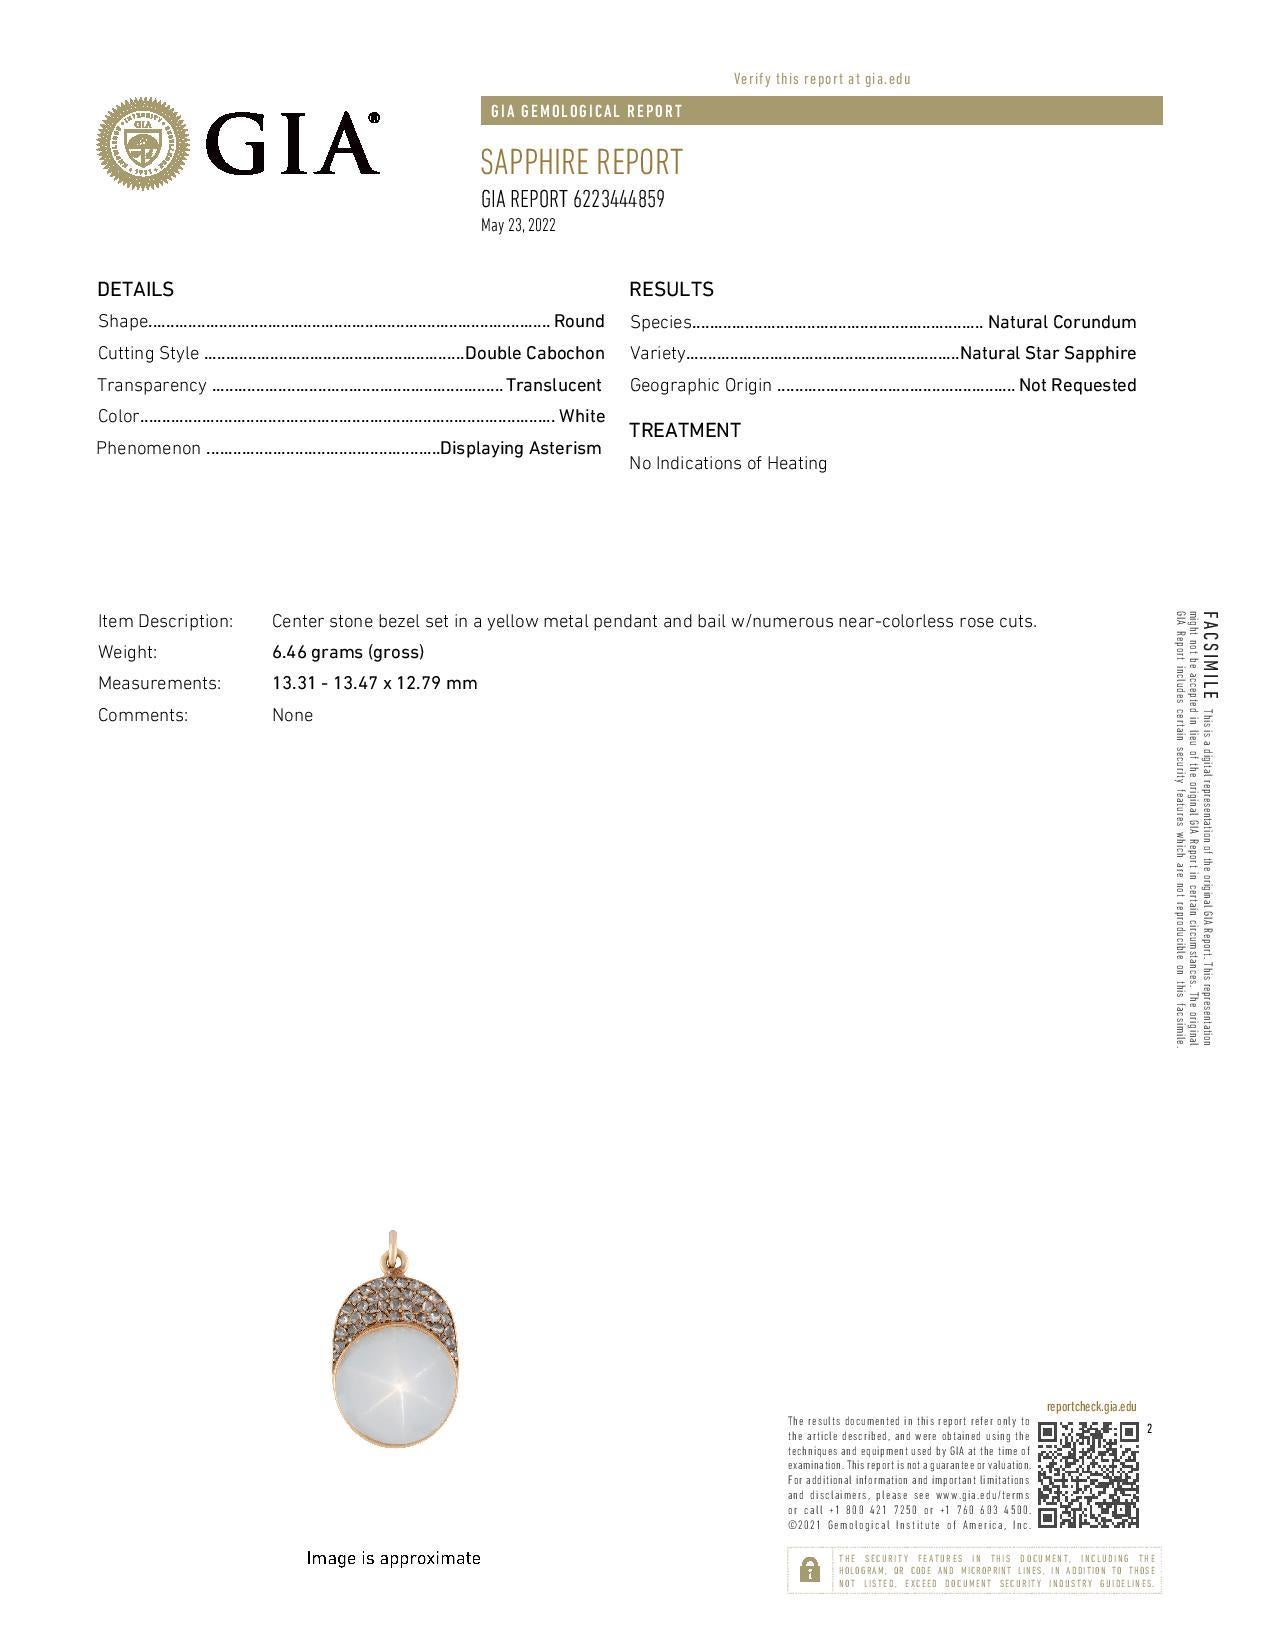 Round Cut GIA 24.67 Carat Star Sapphire Diamond Rose Gold Jockey Cap Pendant Necklace